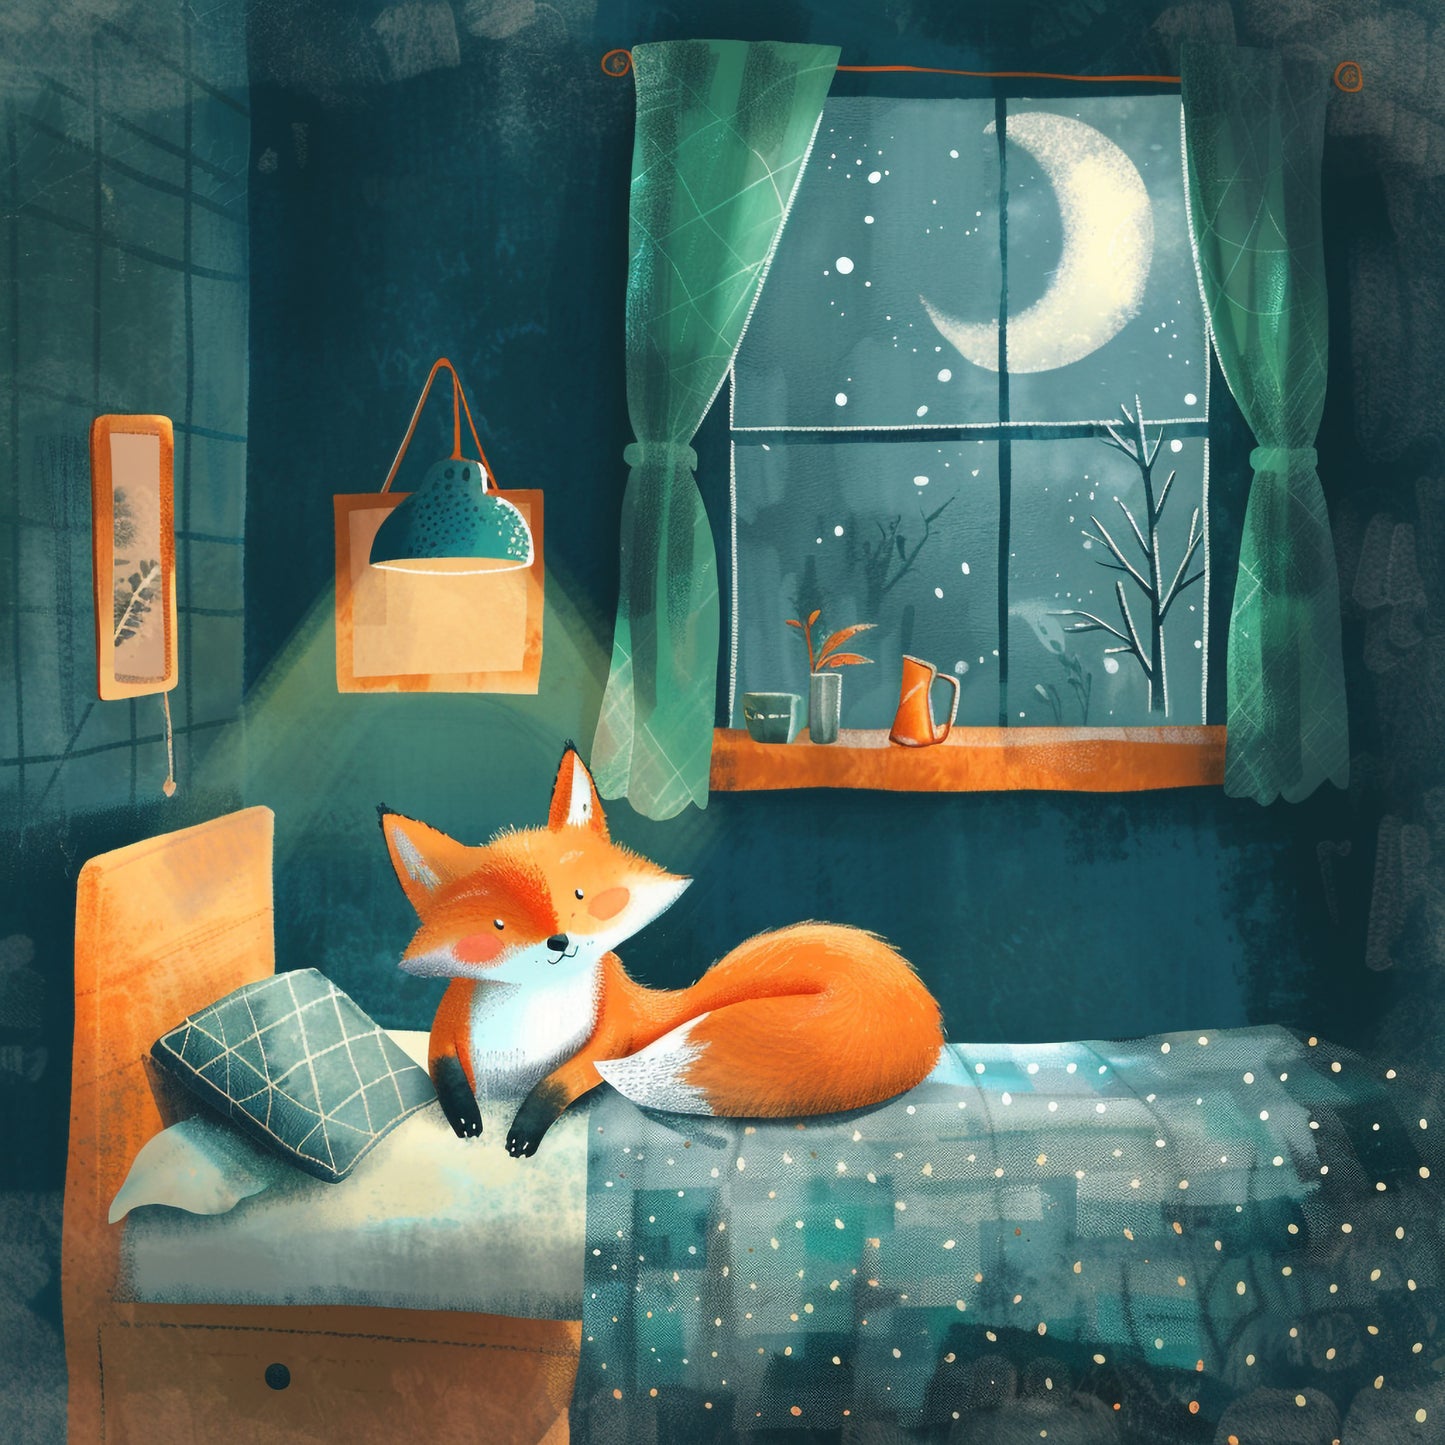 Charming Illustrated Fox Enjoying a Cozy Bedroom at Night